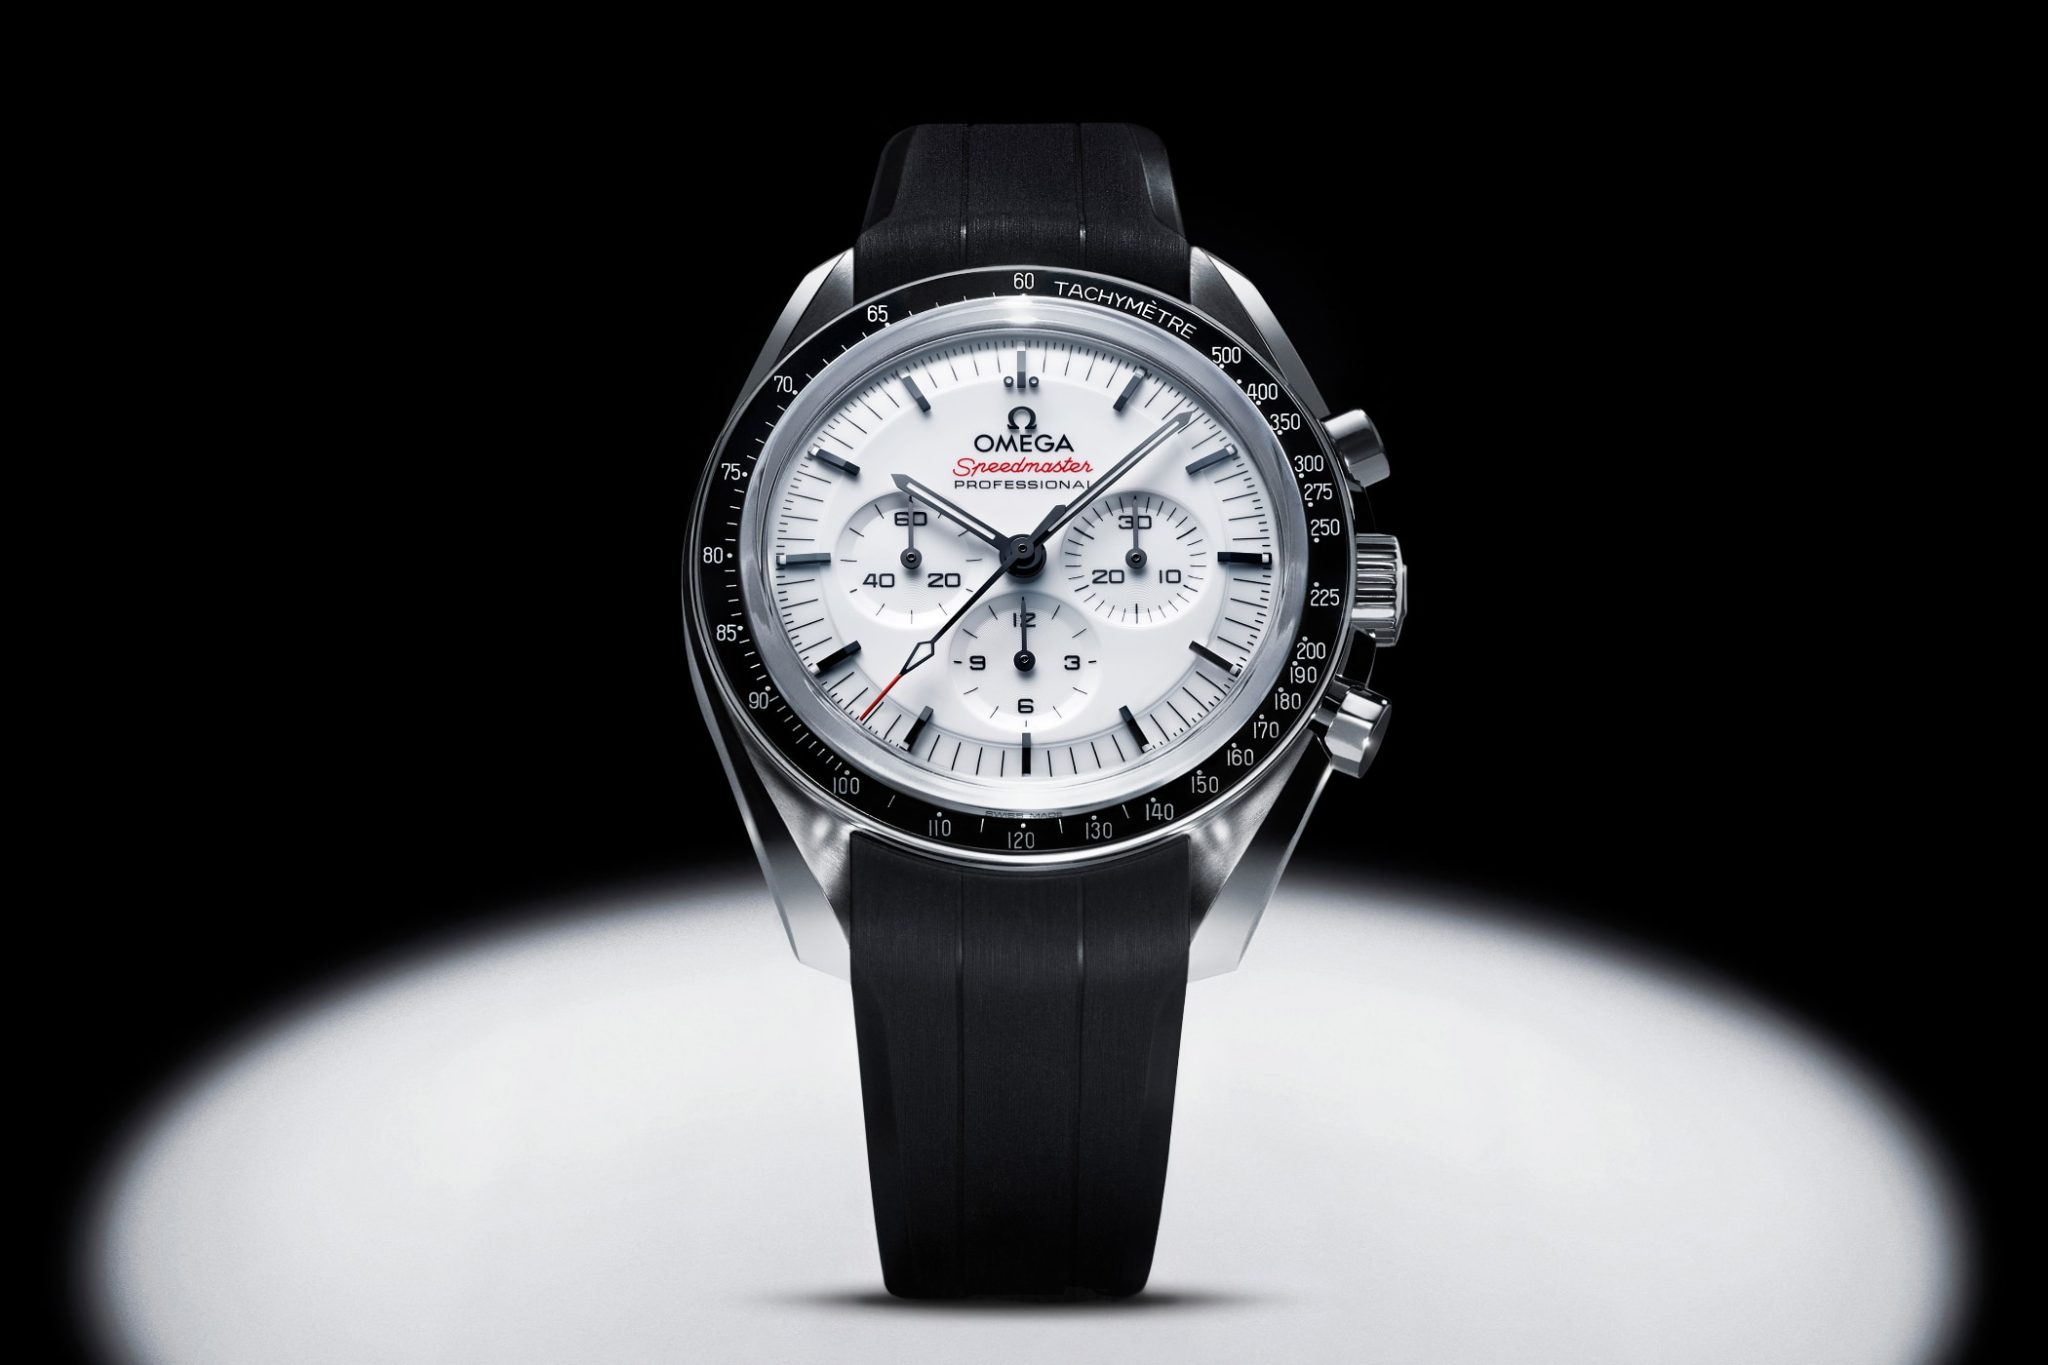 omega-speedmaster-professional-moonwatch-white-dial-310.32.42.50.04.001-kautschukband